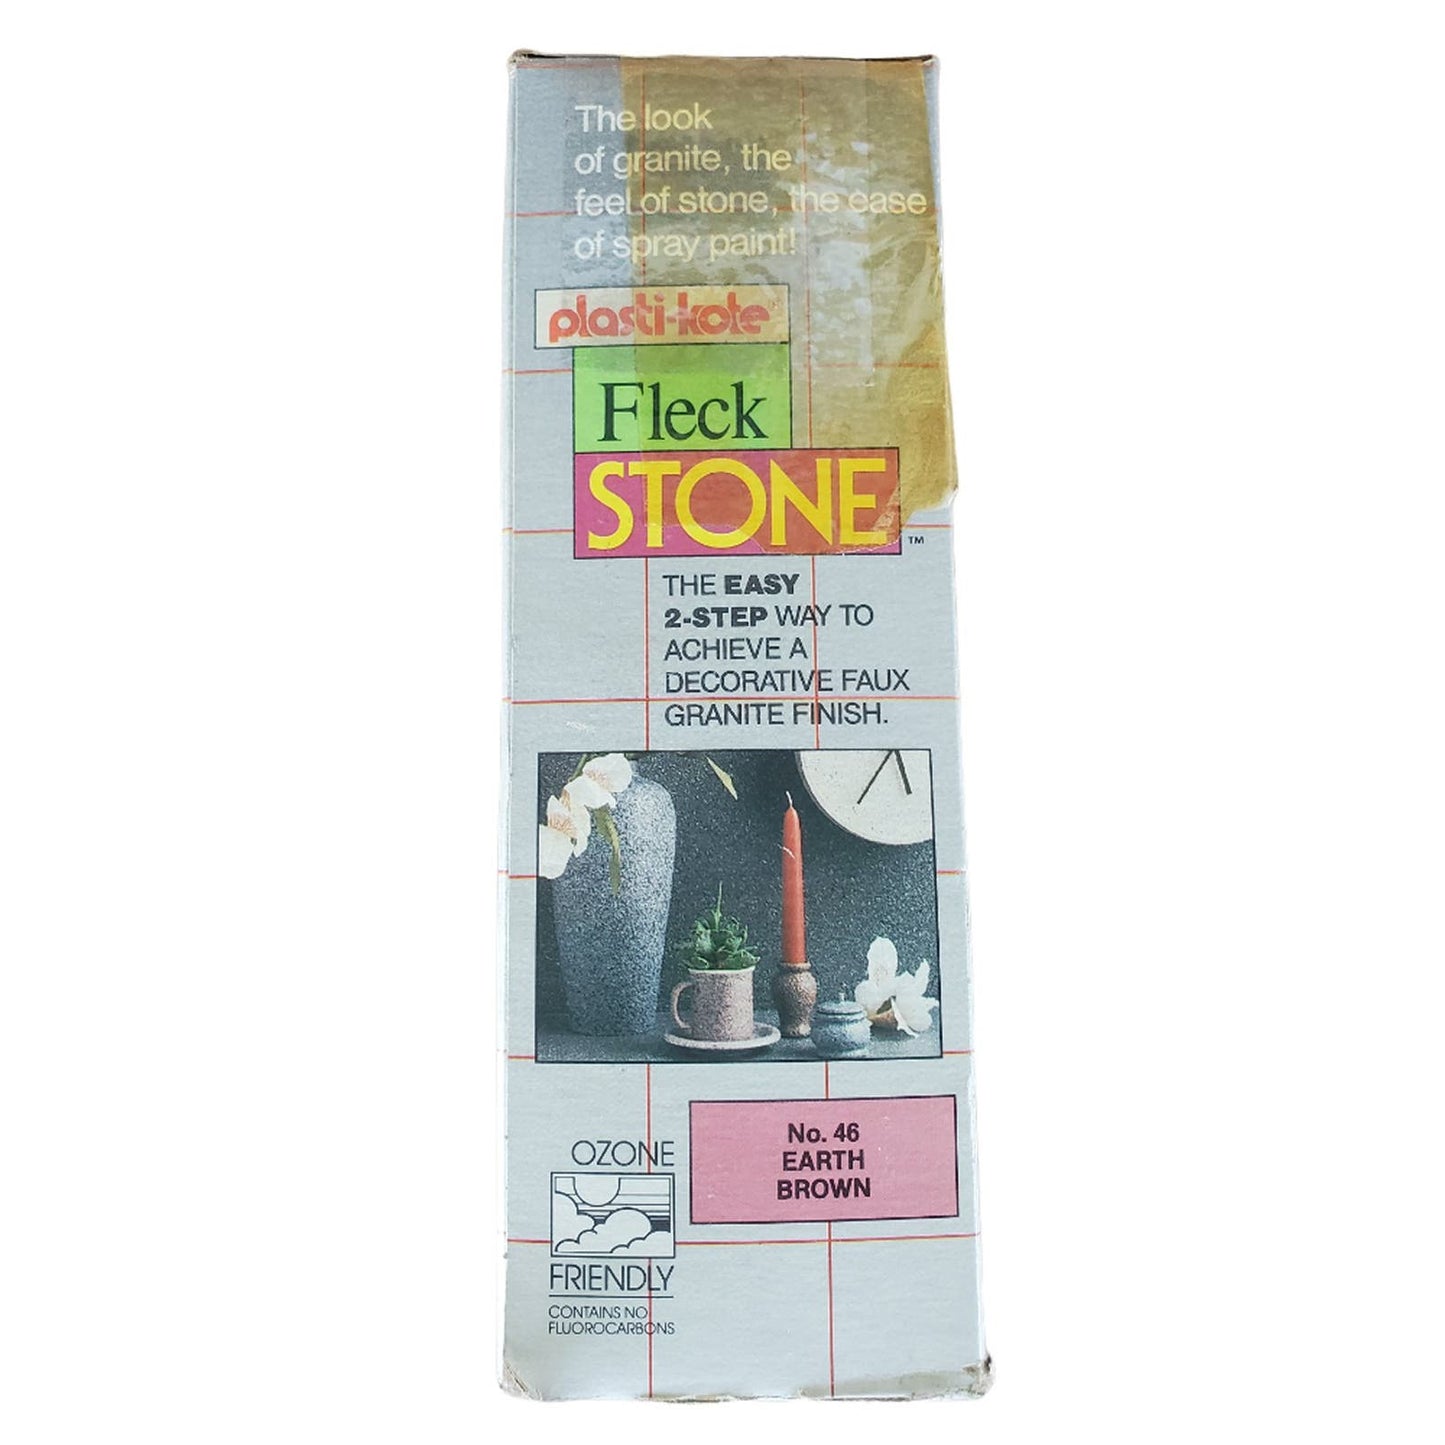 Plasti-Kote Fleck Stone Spray Paint (Earth Brown),  2-Step Faux Granite Finish